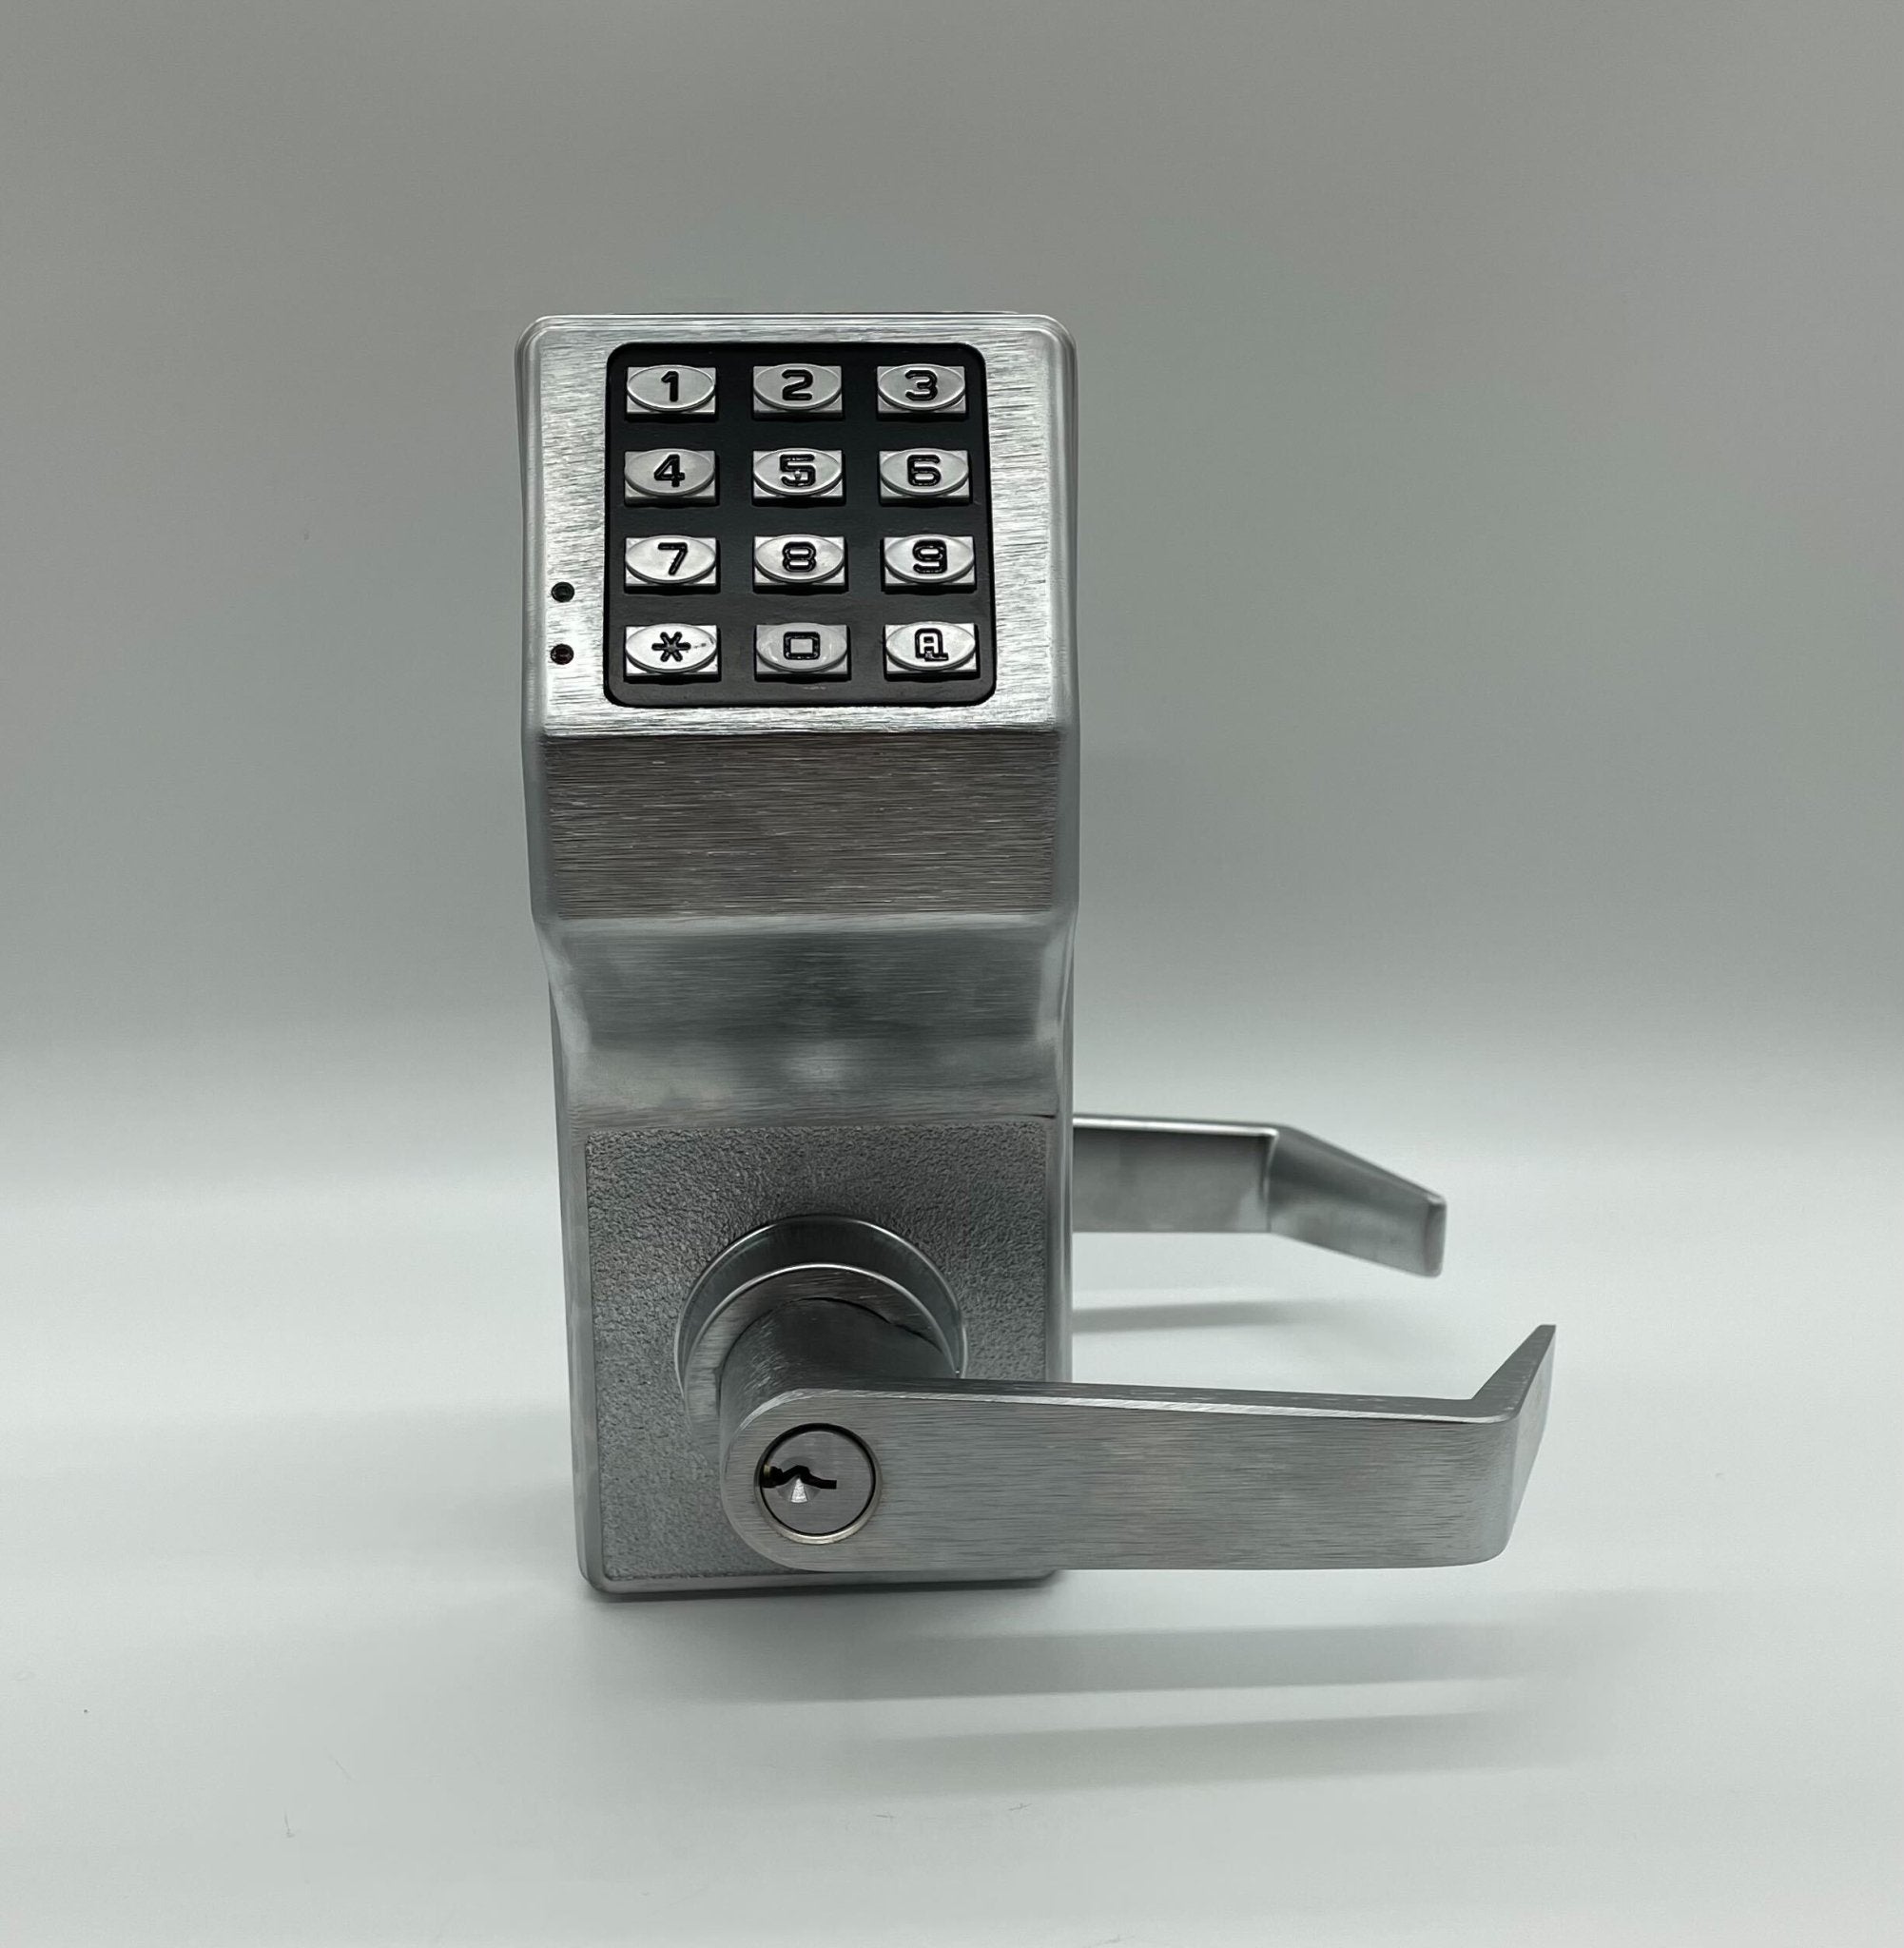 Napco DL2700-26D - The Fire Alarm Supplier